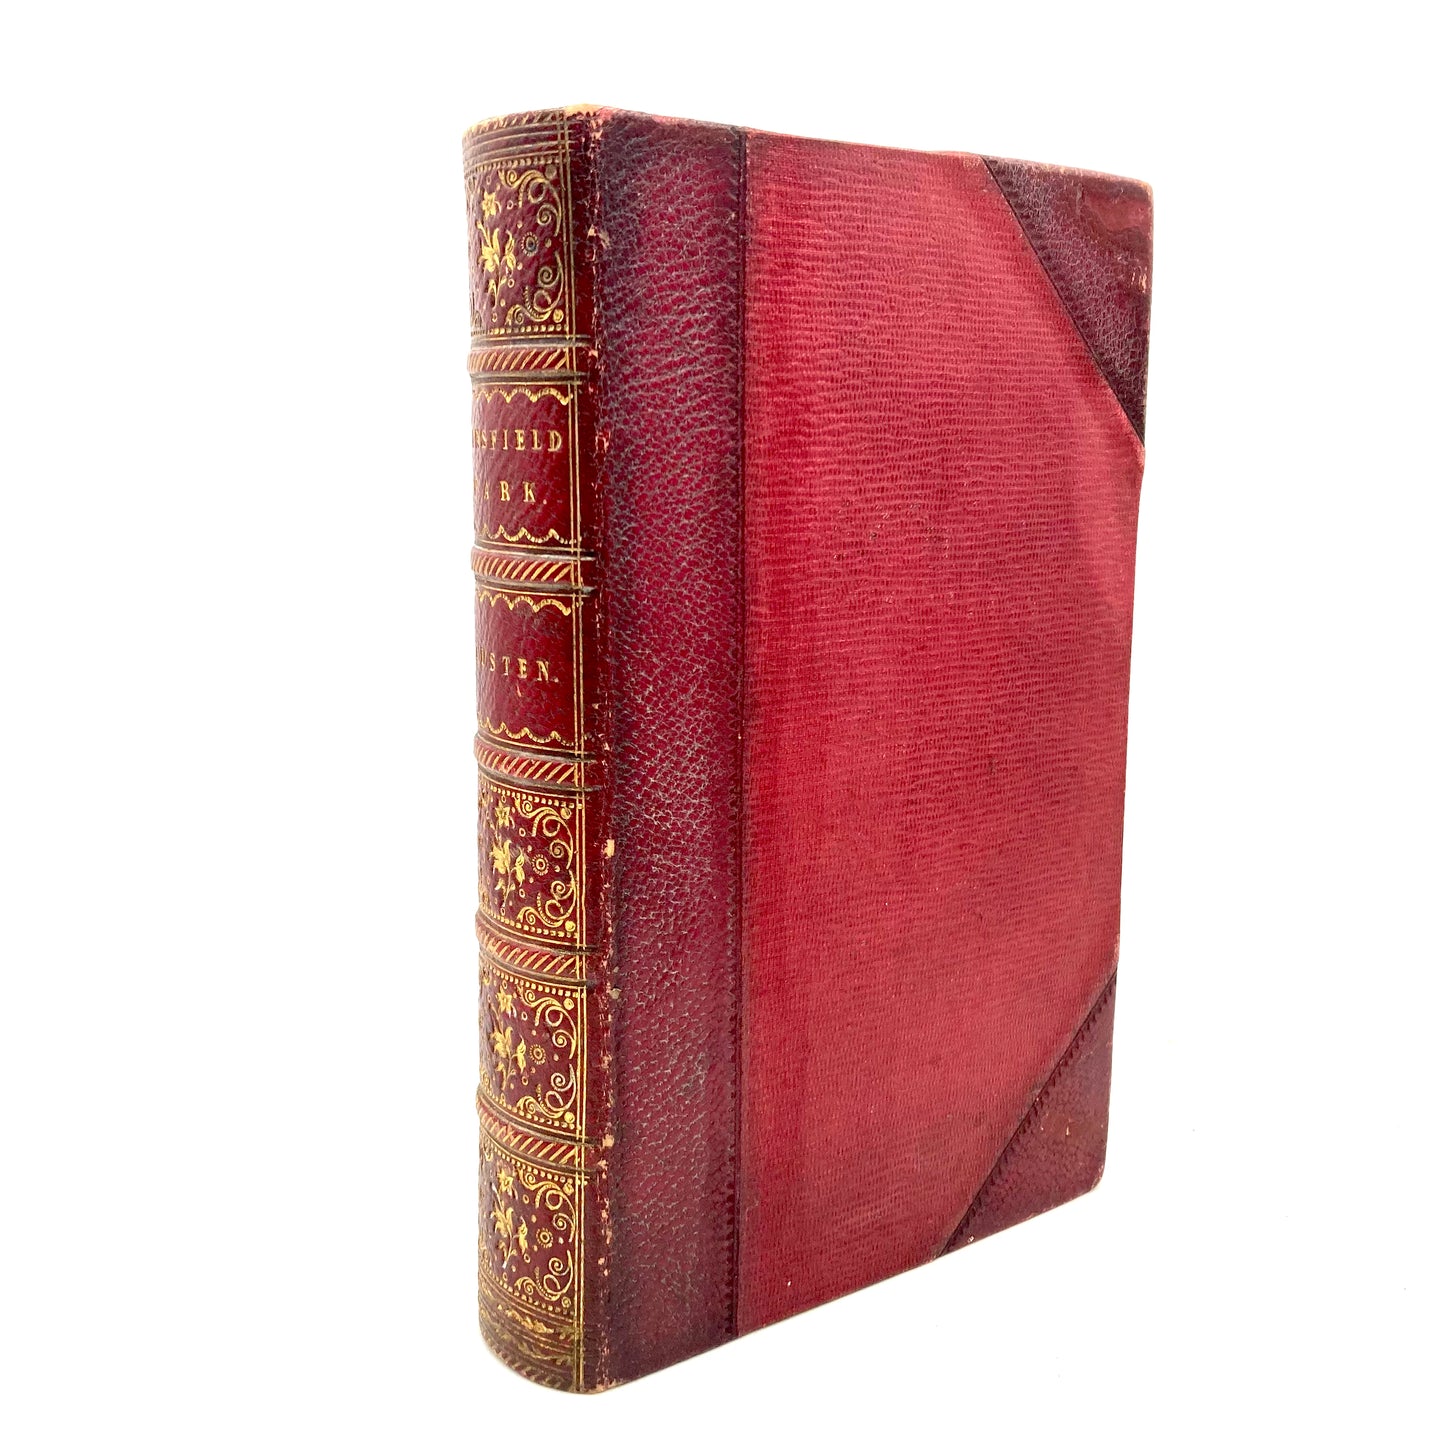 AUSTEN, Jane "Mansfield Park" [Richard Bentley, 1856] - Buzz Bookstore